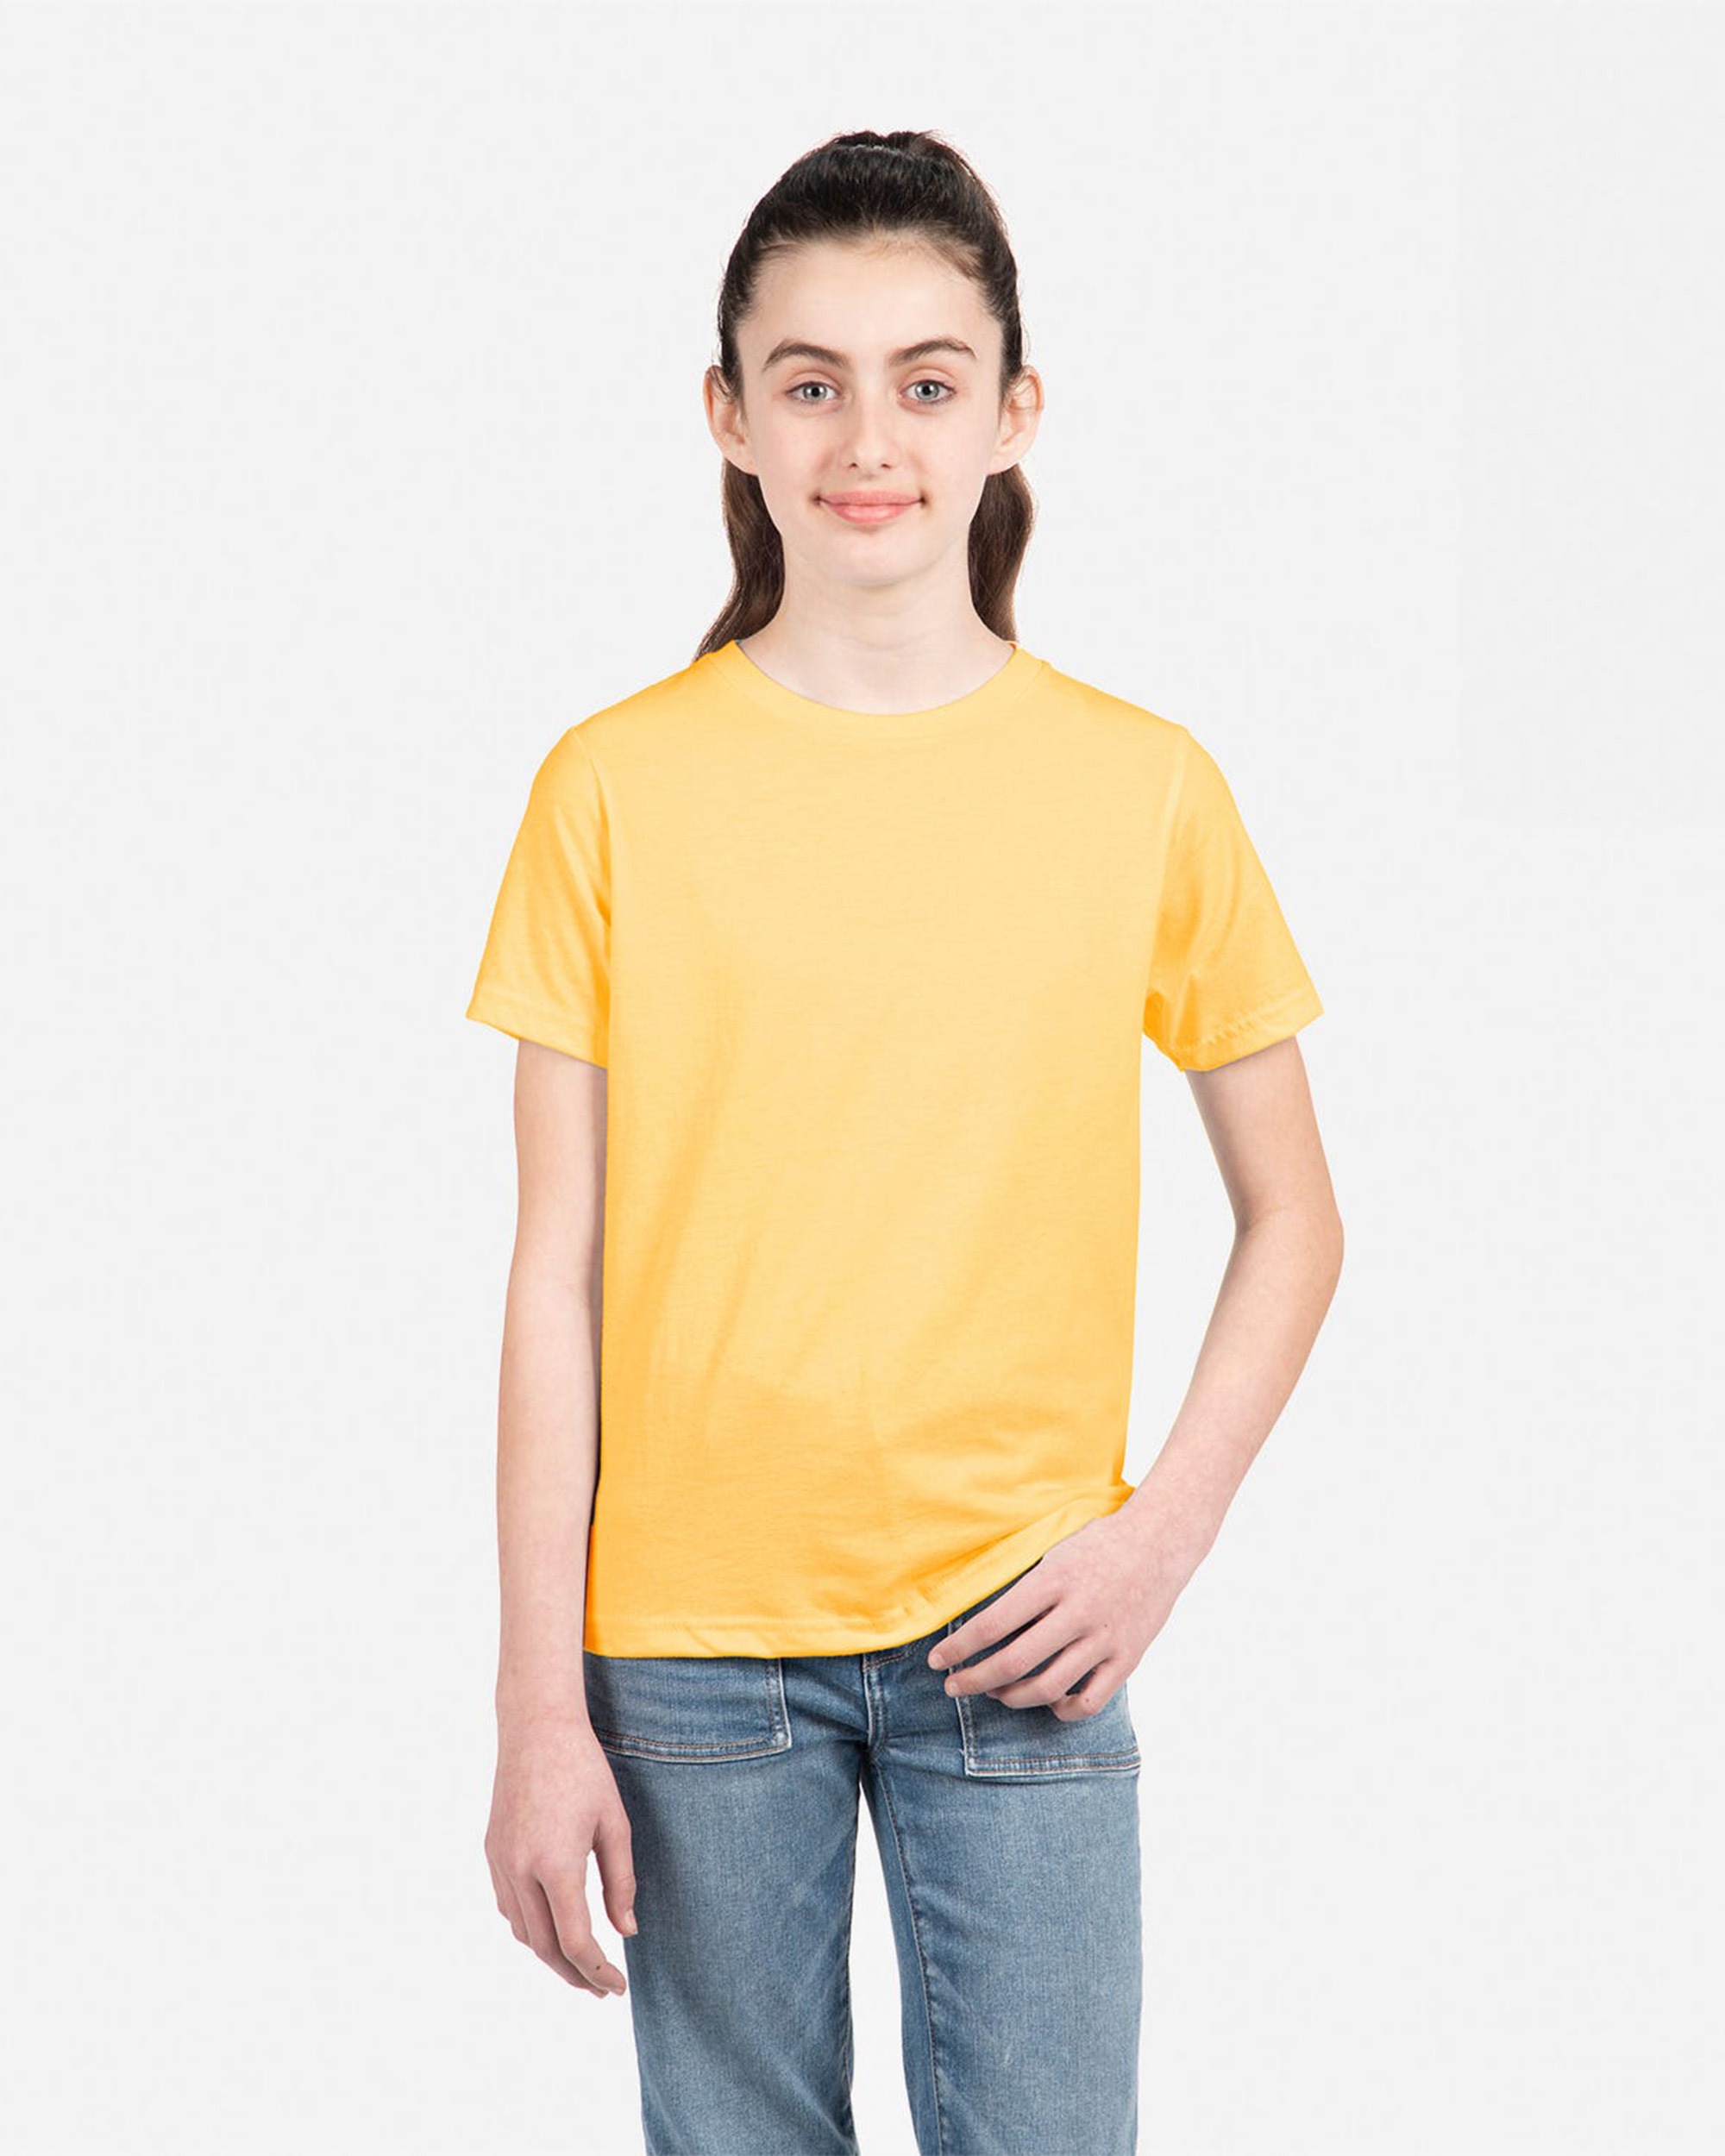 Next Level Apparel® 3312 Youth CVC T-Shirt